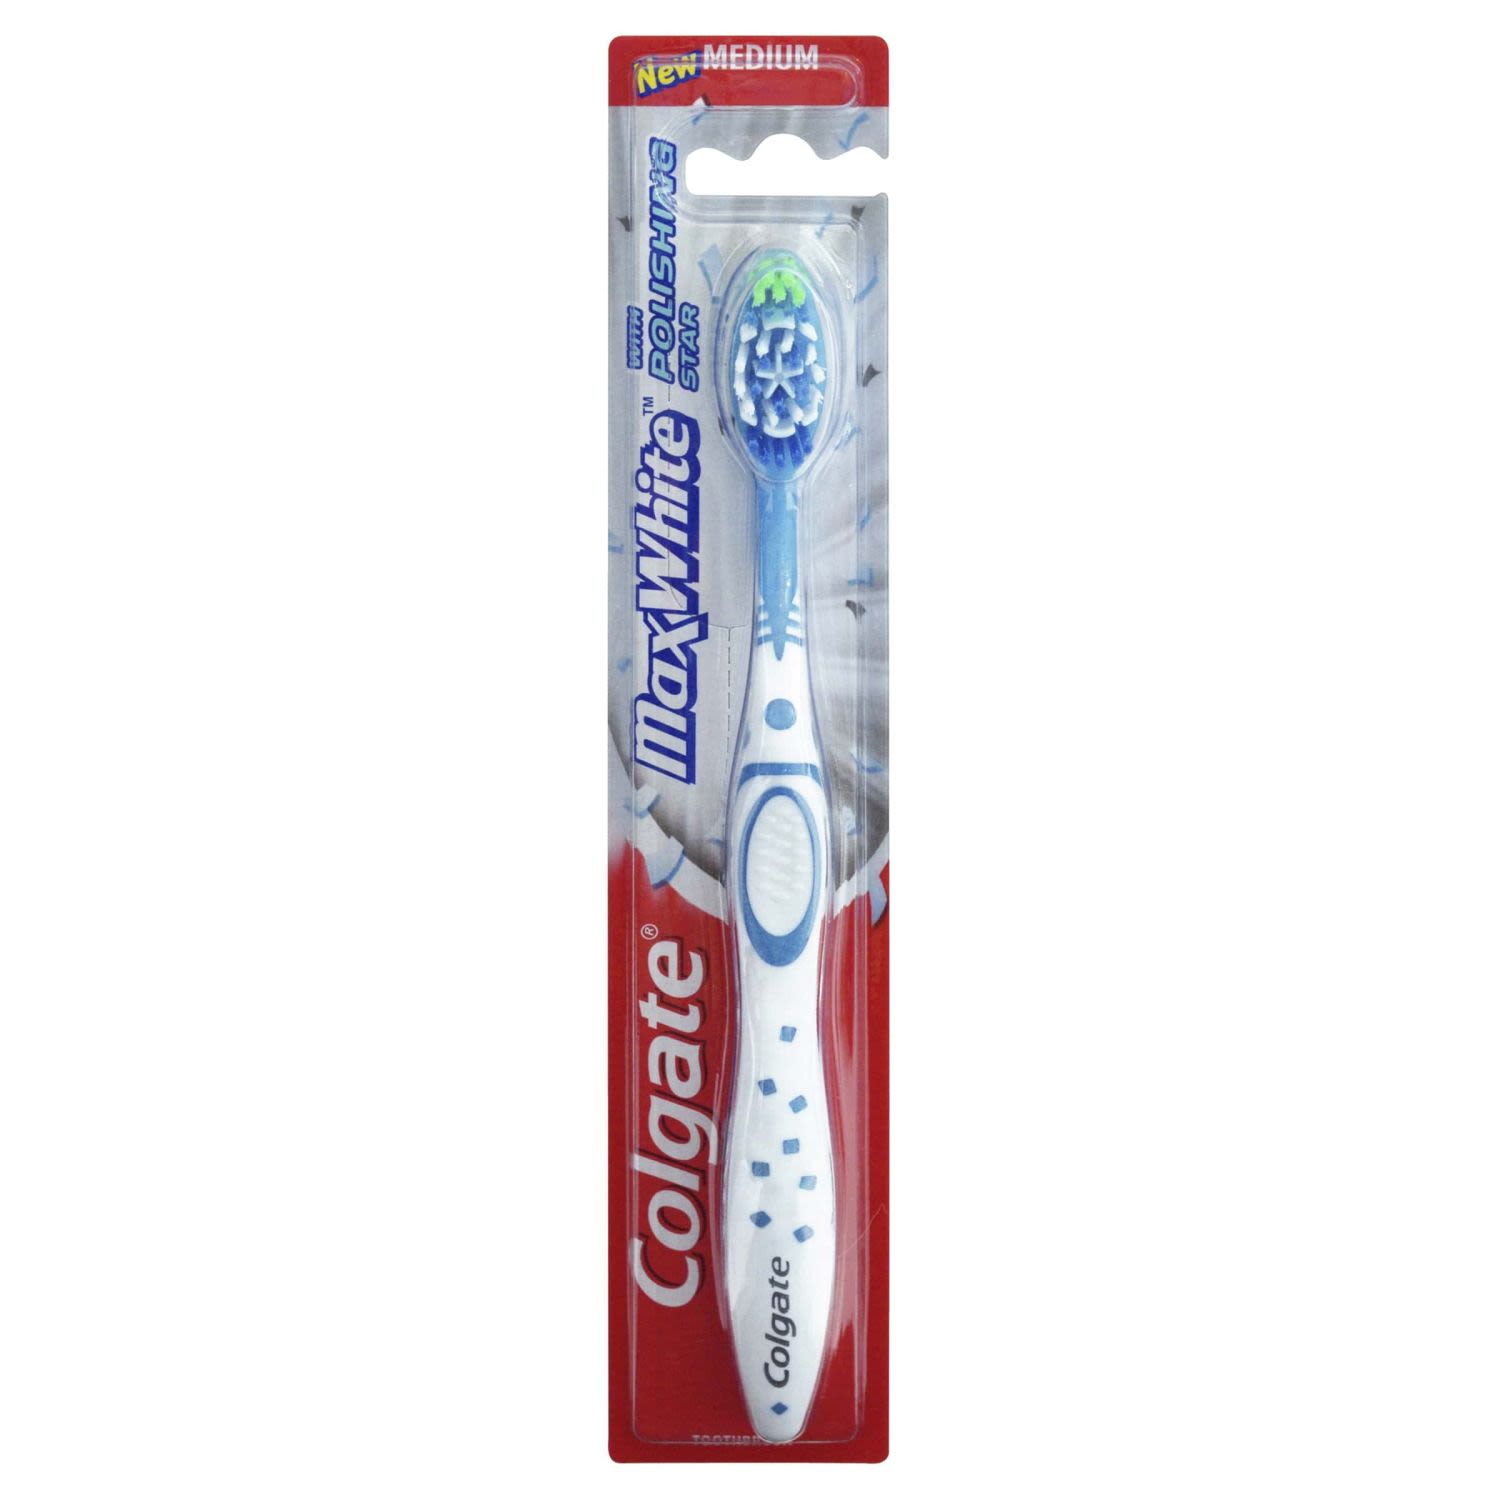 Colgate Max White Toothbrush Medium with polishing star, 1 Each